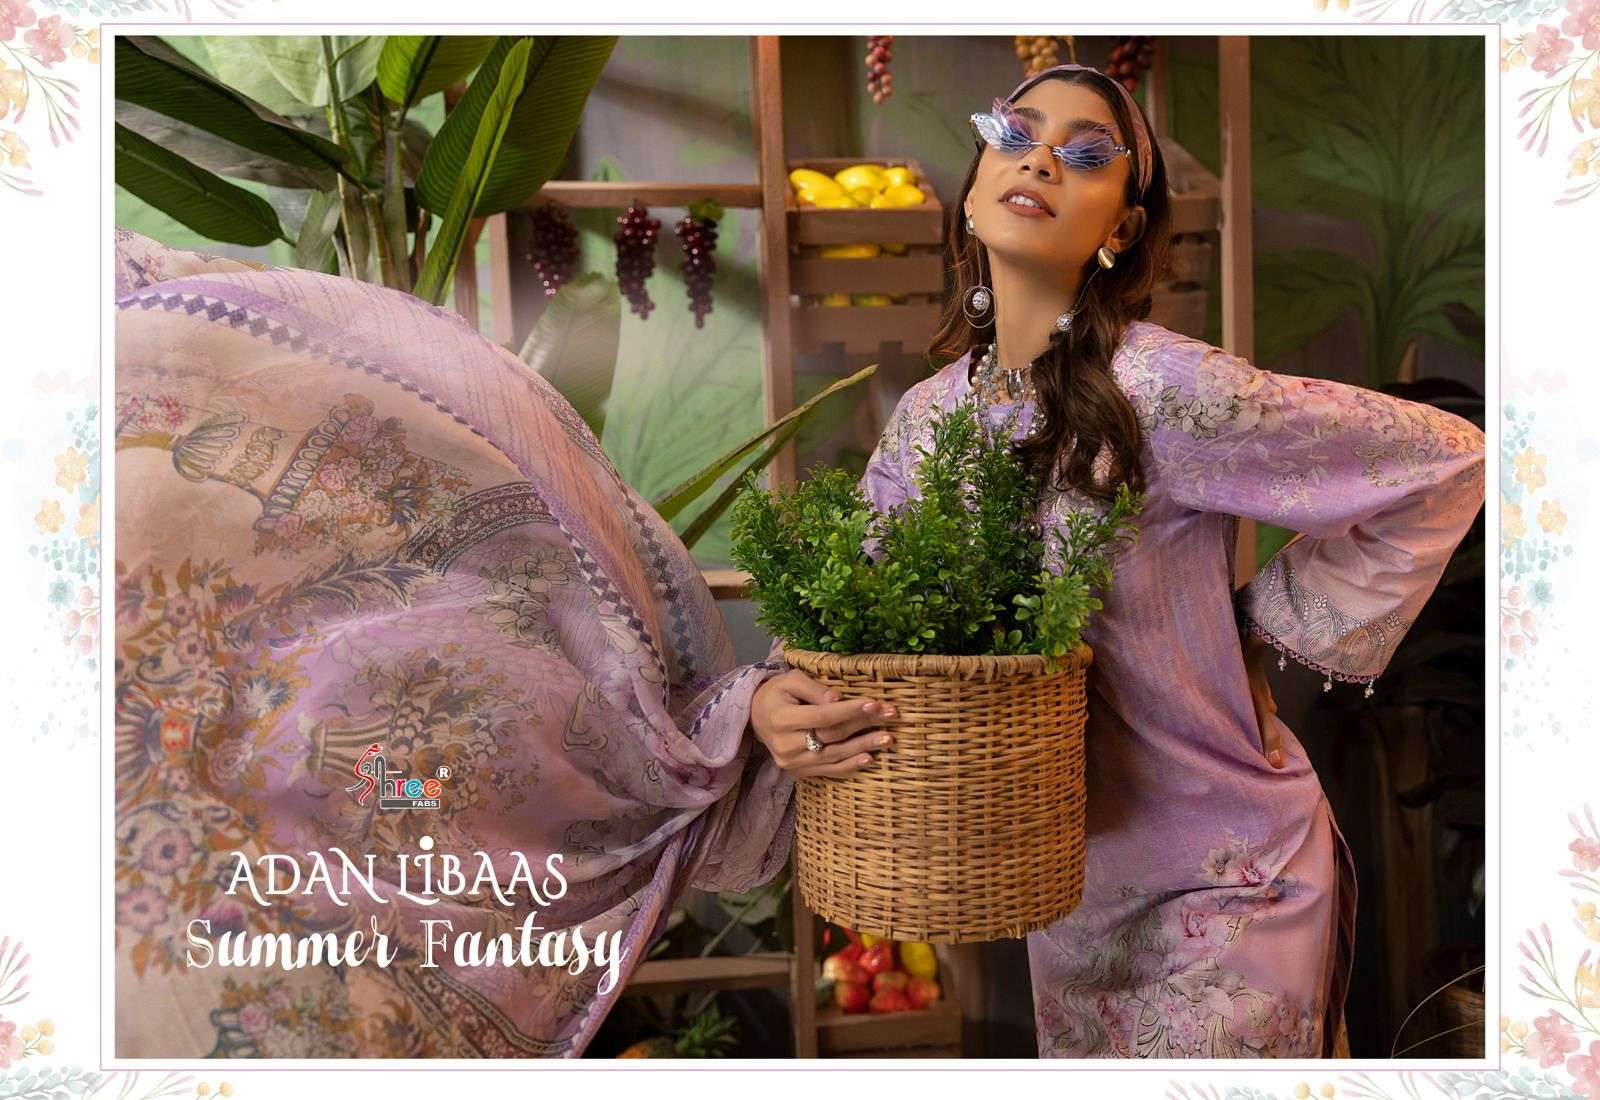 shree fabs adan libaas summer fantasy 3132-3139 series pure cotton exclusive neck embroidered salwar kameez surat